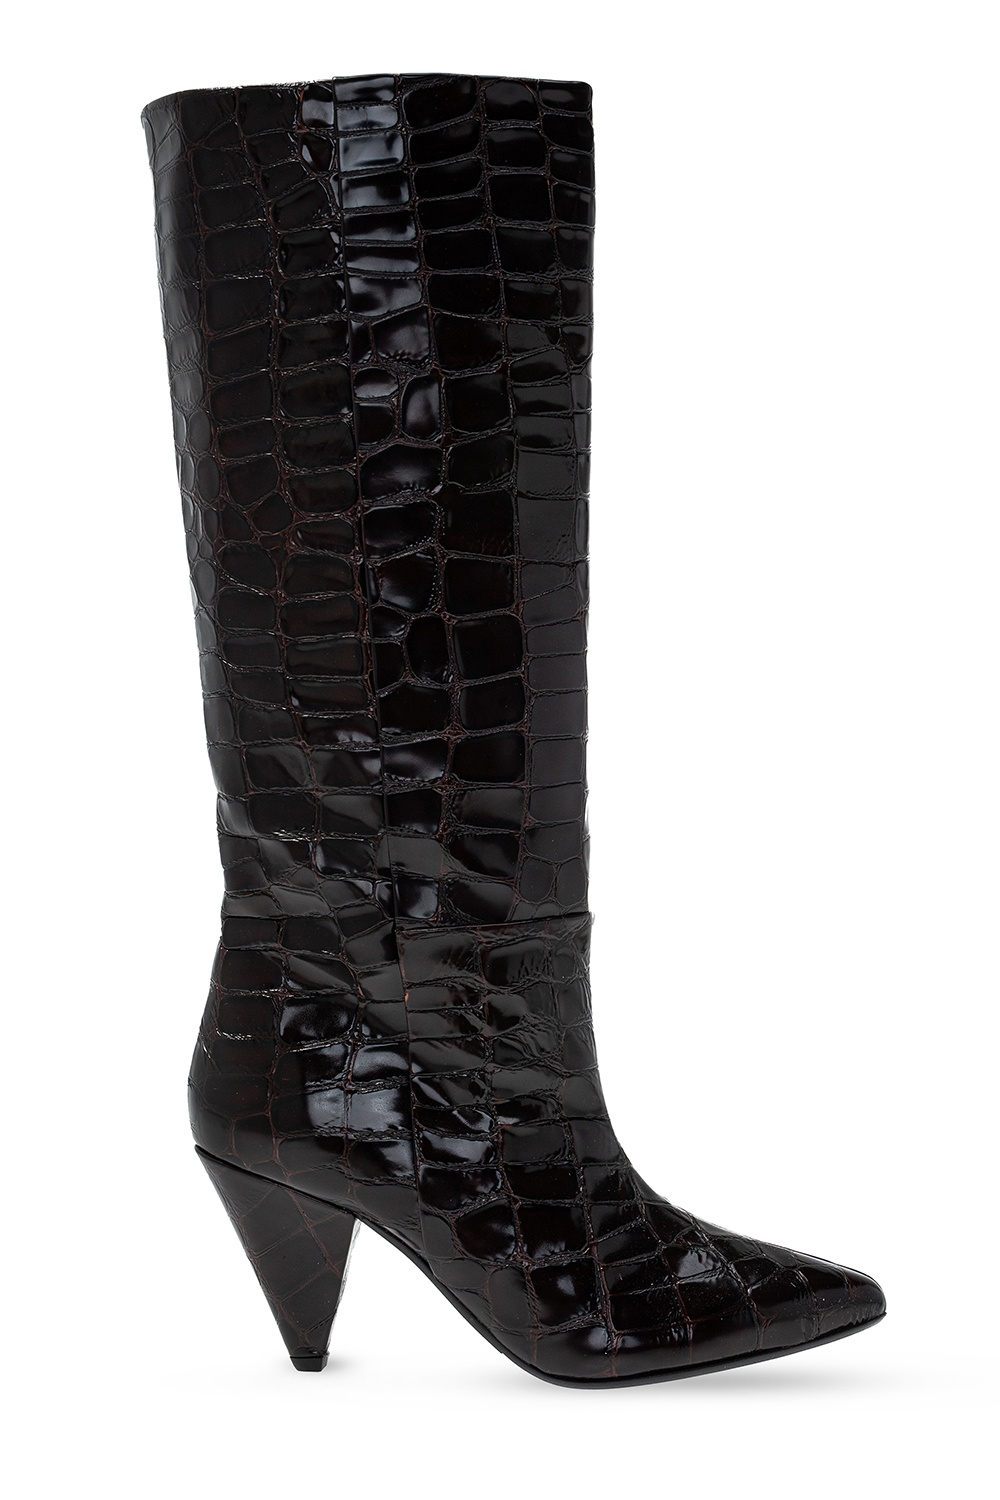 Samsøe Samsøe ‘Myrassa’ heeled knee-high boots